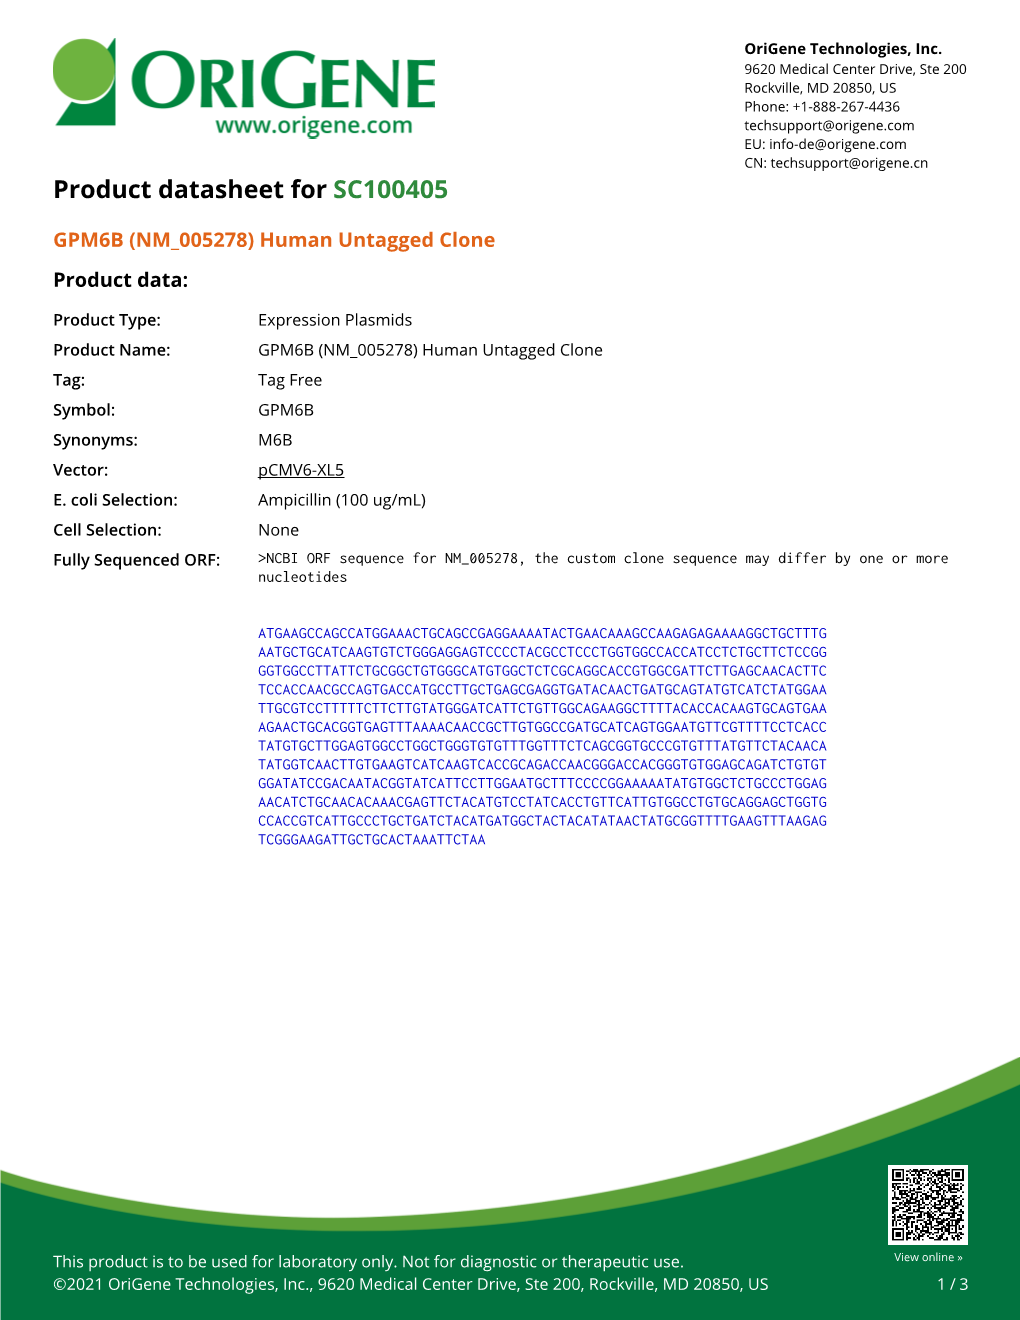 GPM6B (NM 005278) Human Untagged Clone Product Data